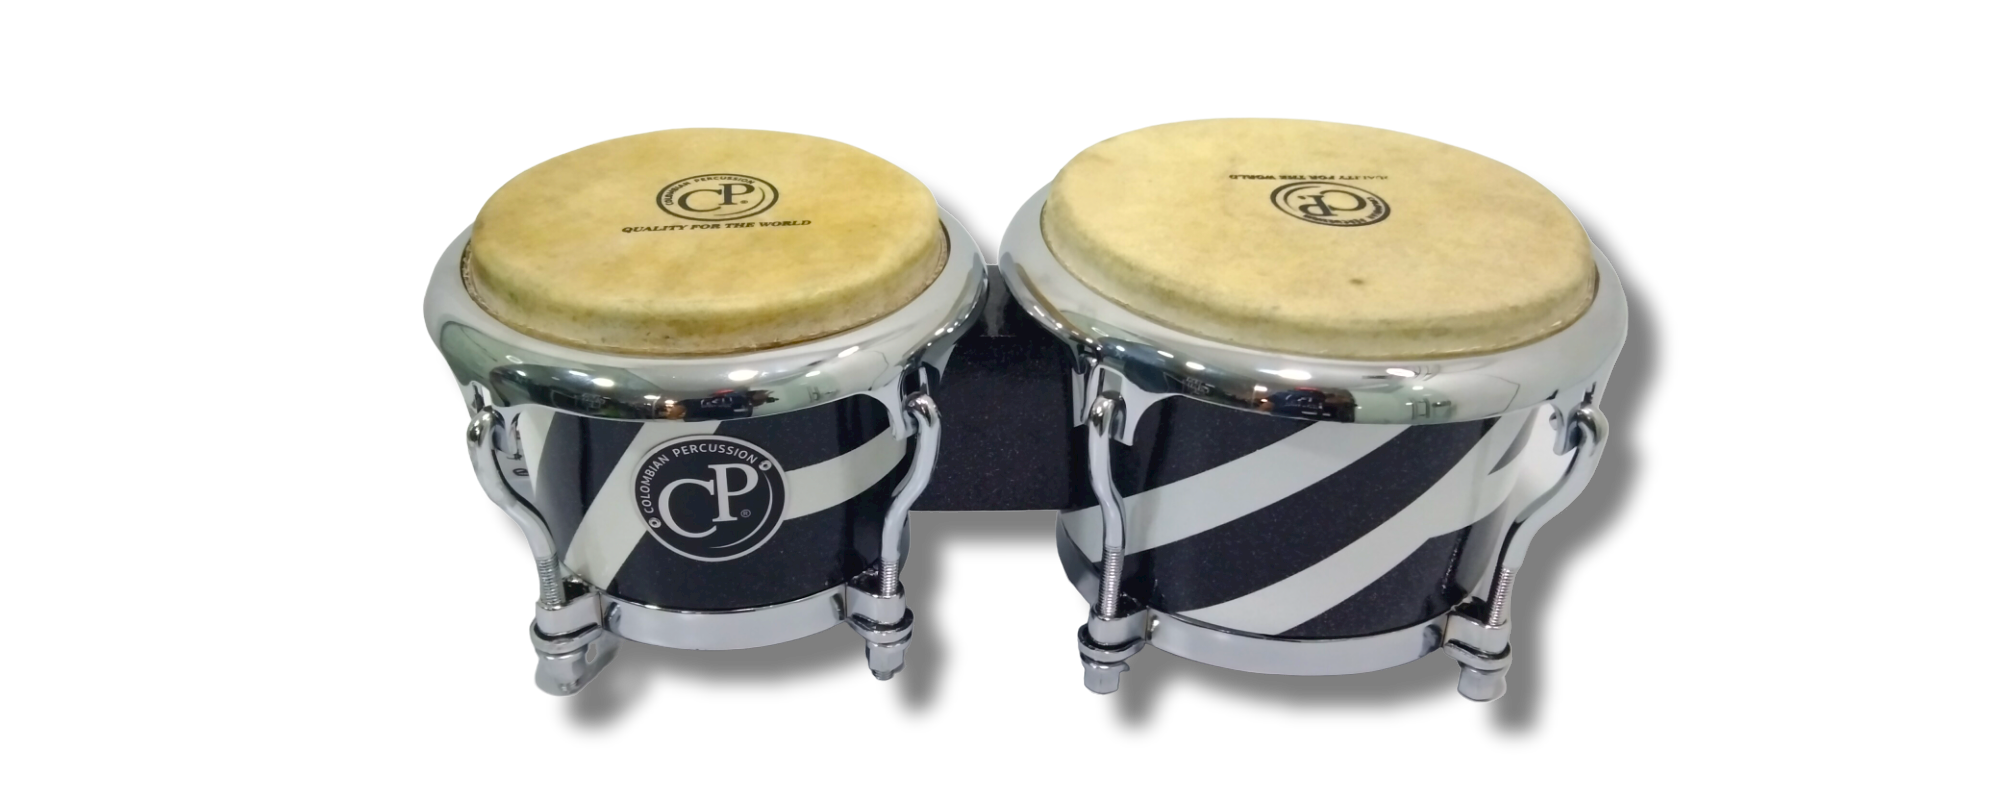 bongo CP en fibra de vidrio color negro con rayas blancas